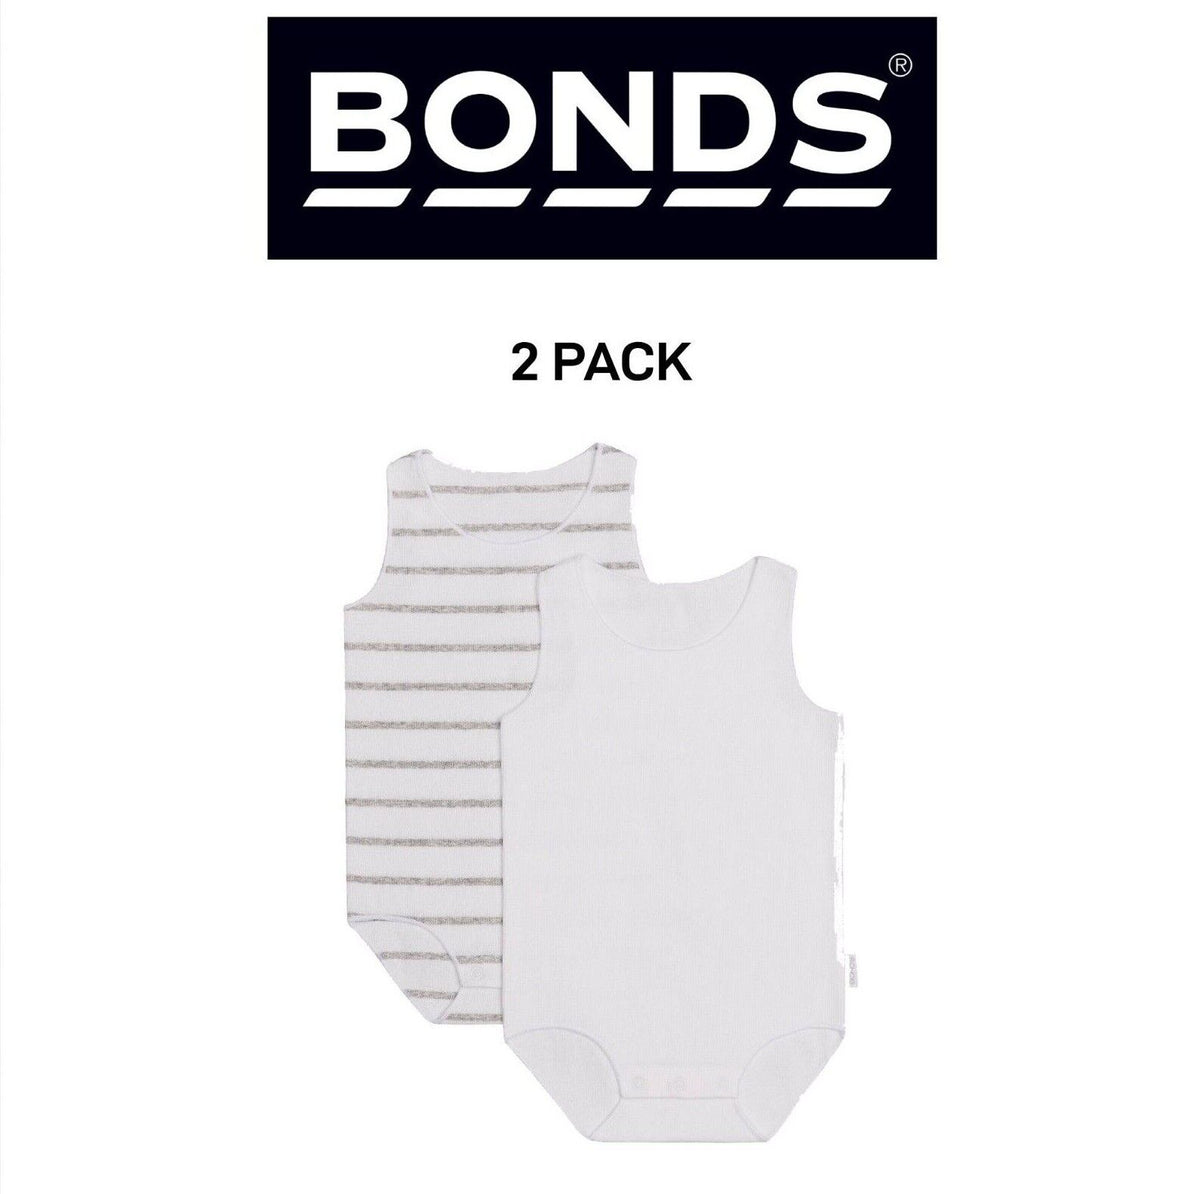 Bonds Baby Wonderbodies Singlets Comfy Soft Stretchable Cotton 2 Pack BWTRA